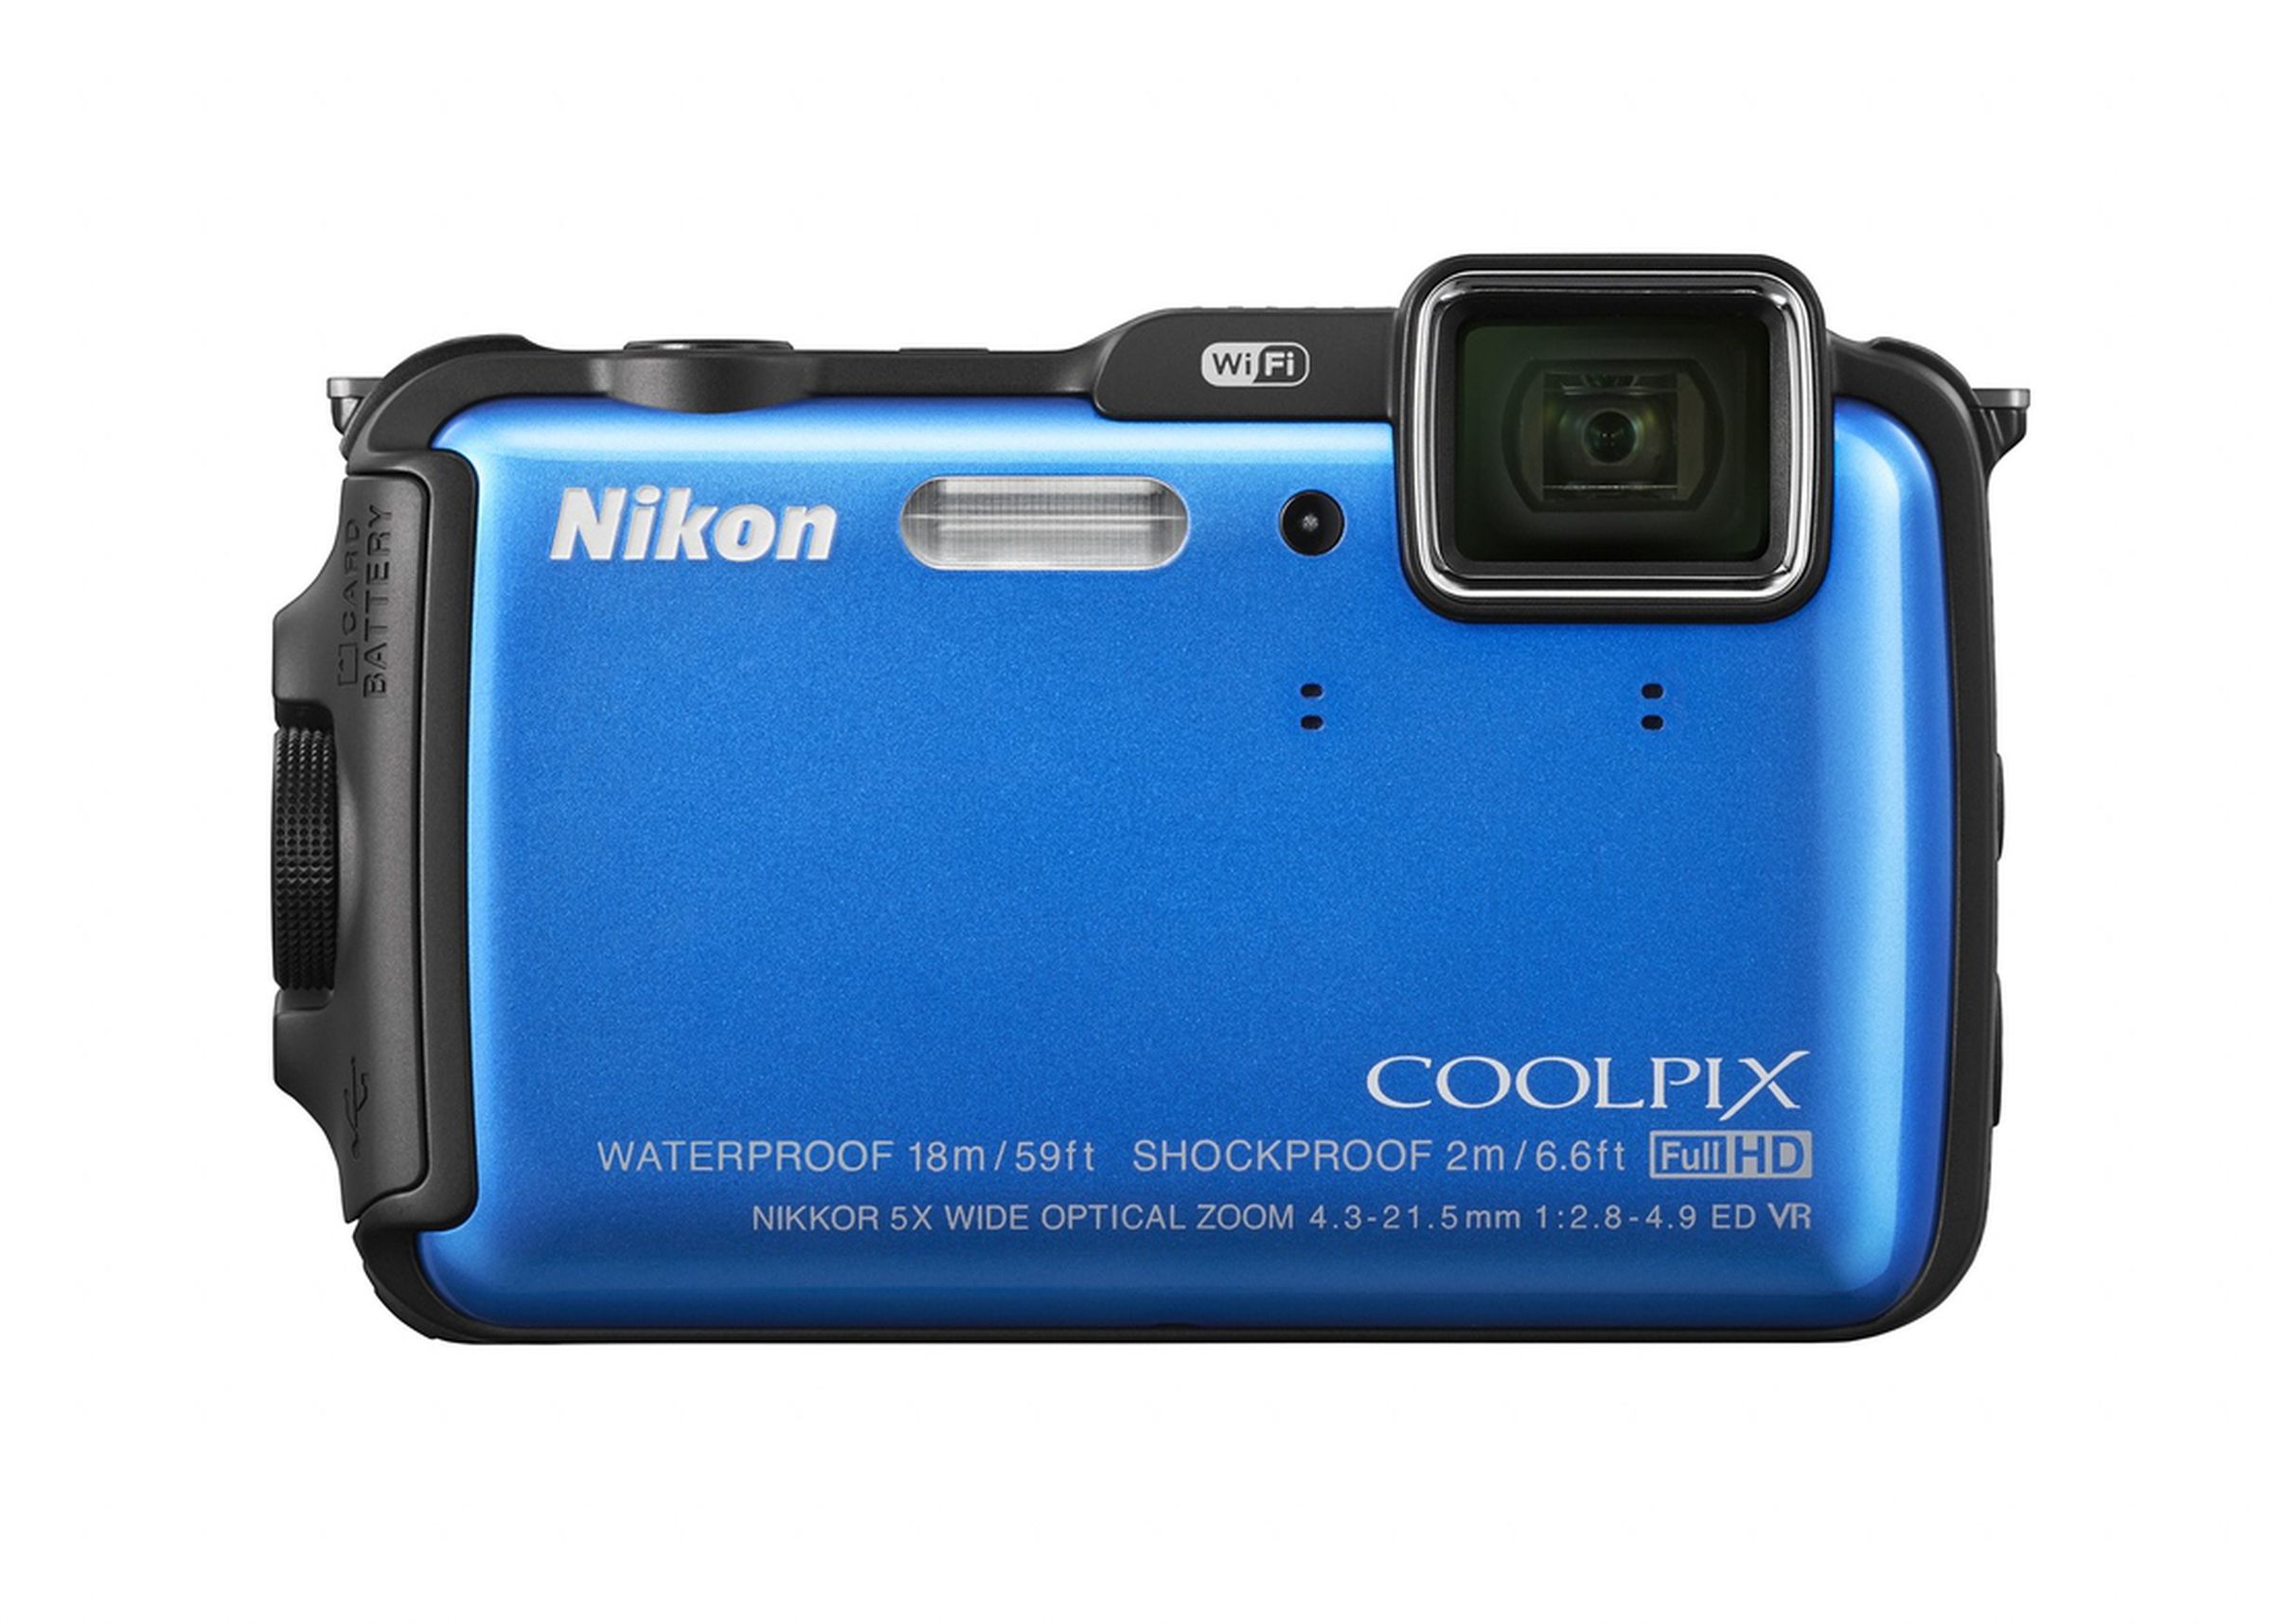 Nikon Coolpix press photos